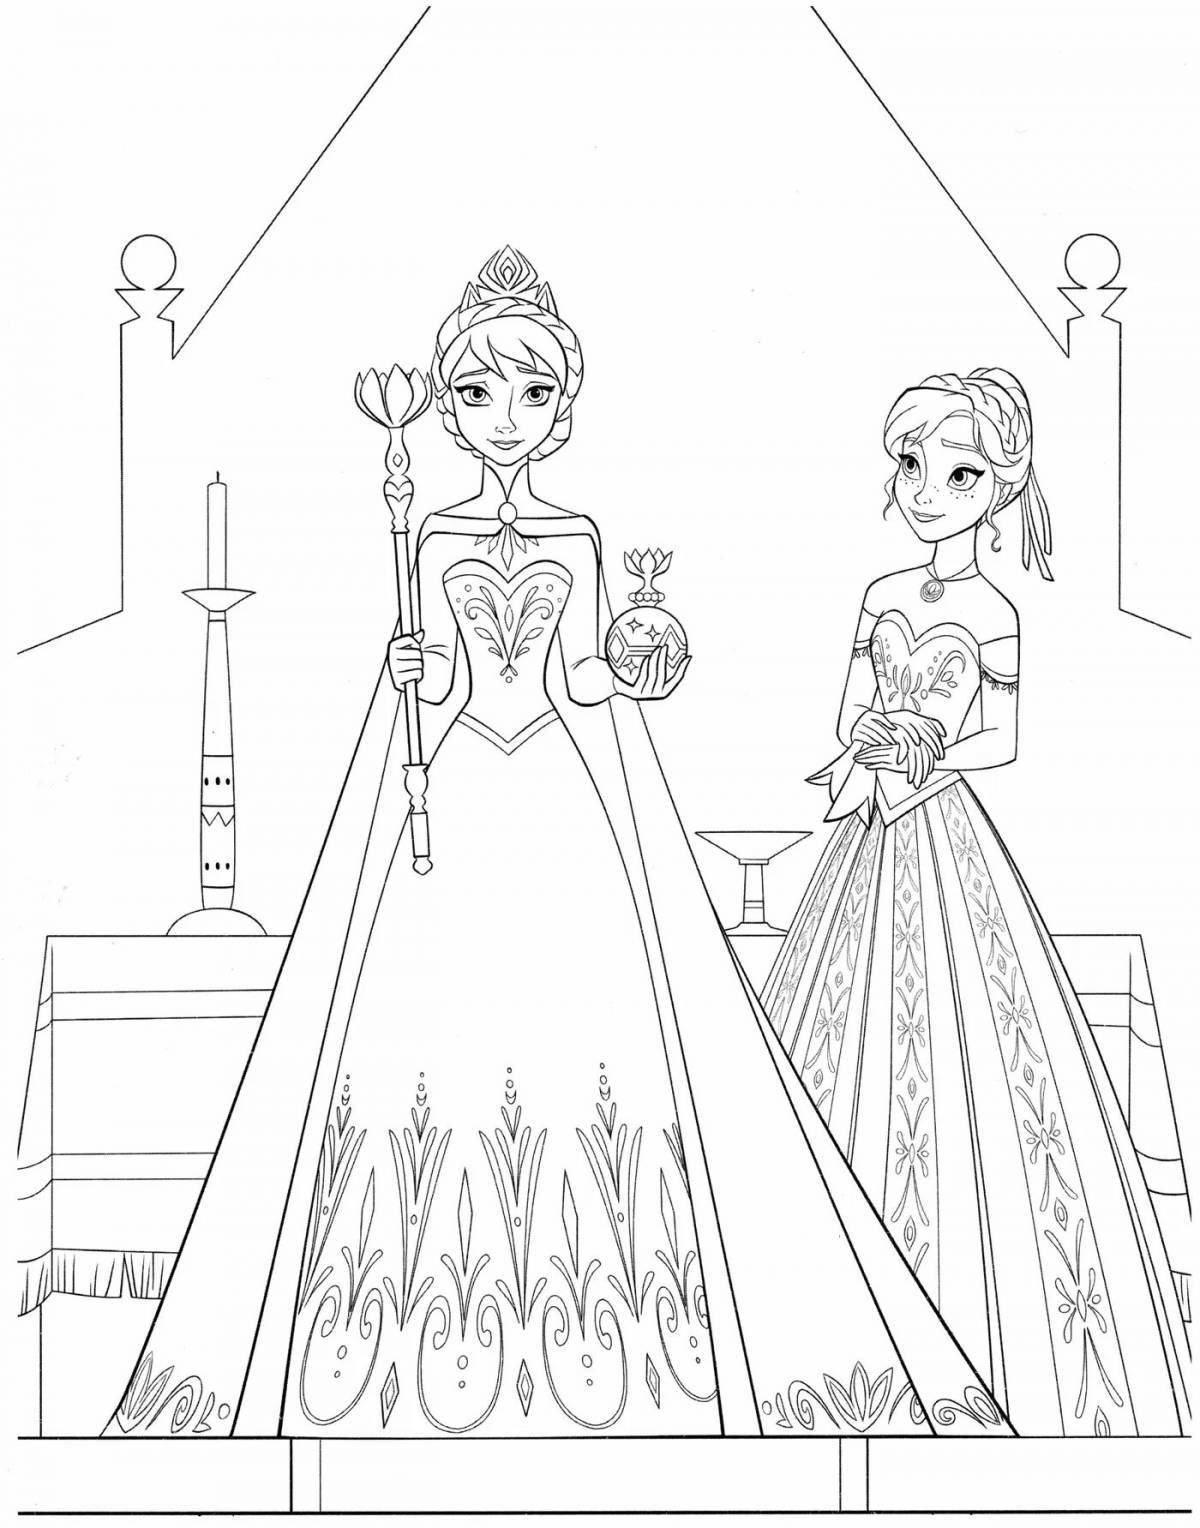 Glorious princess anna coloring page